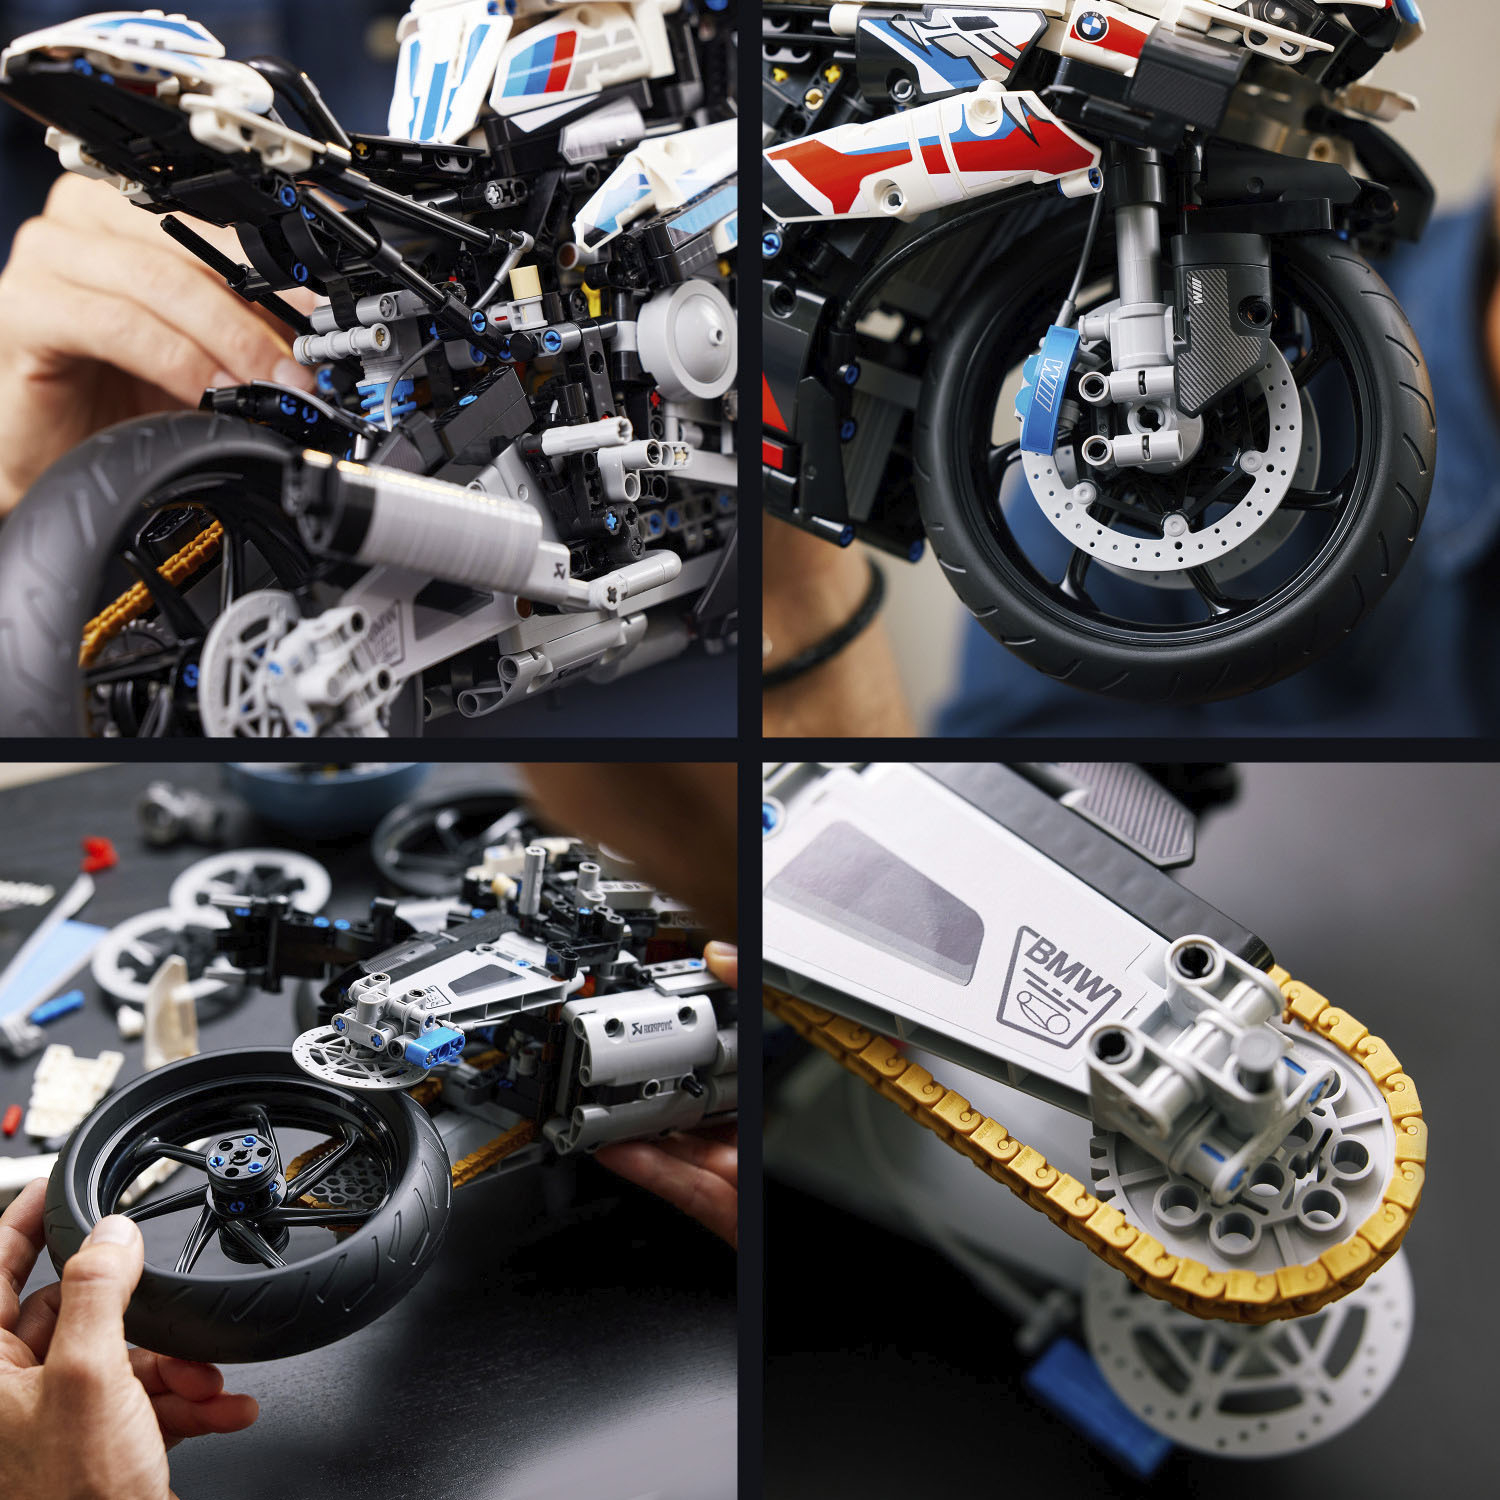 LEGO Technic BMW M 1000 RR 42130 6332762 - Best Buy